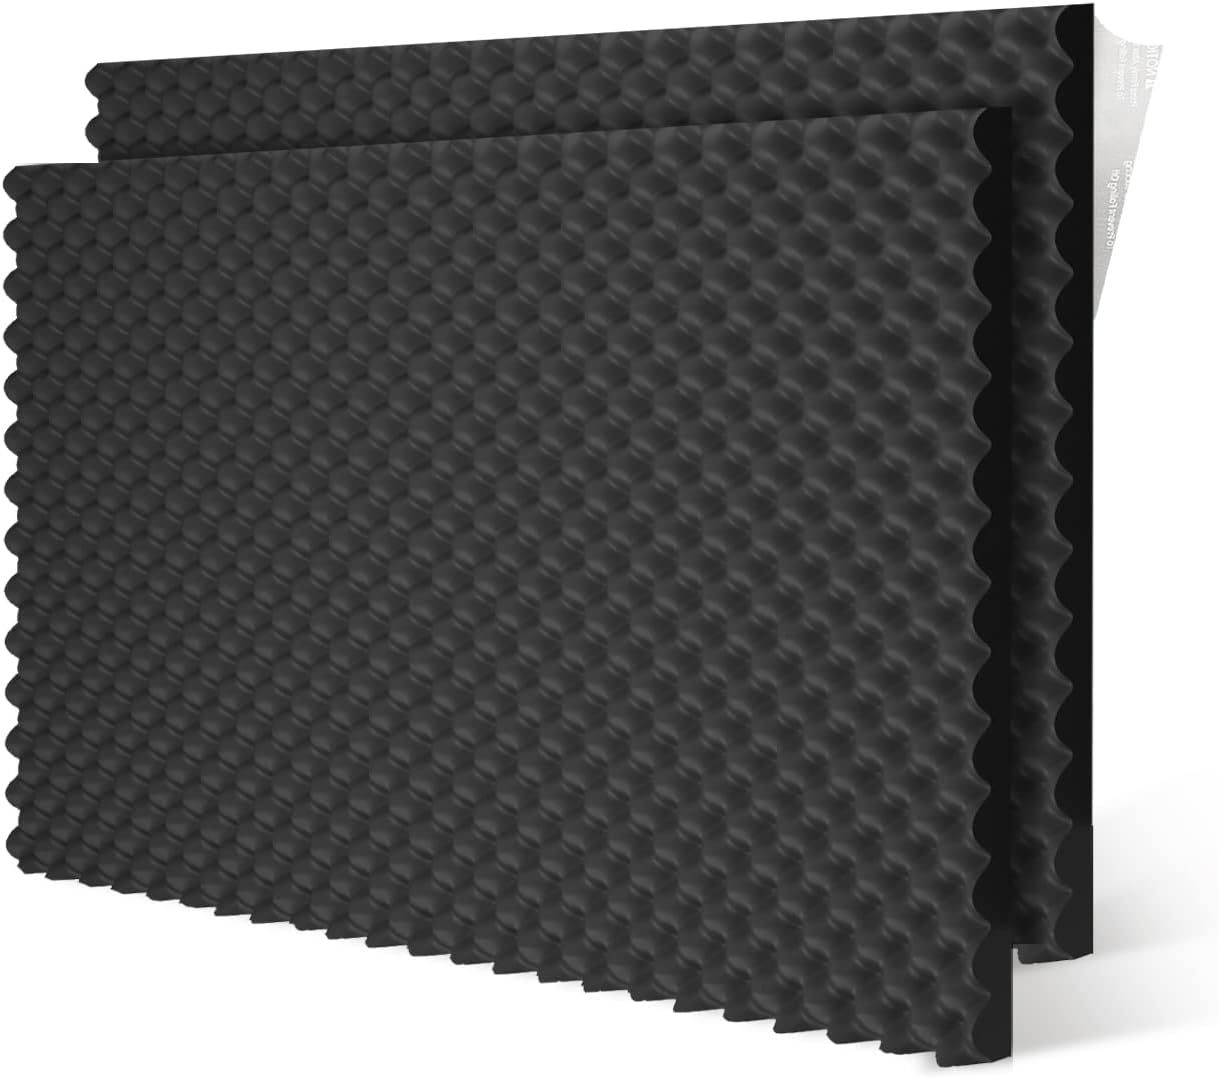 Primary image for Eekiya Acoustic Foam Egg Crate Panel Studio Foam Wall Panel, 2 Pack, Black